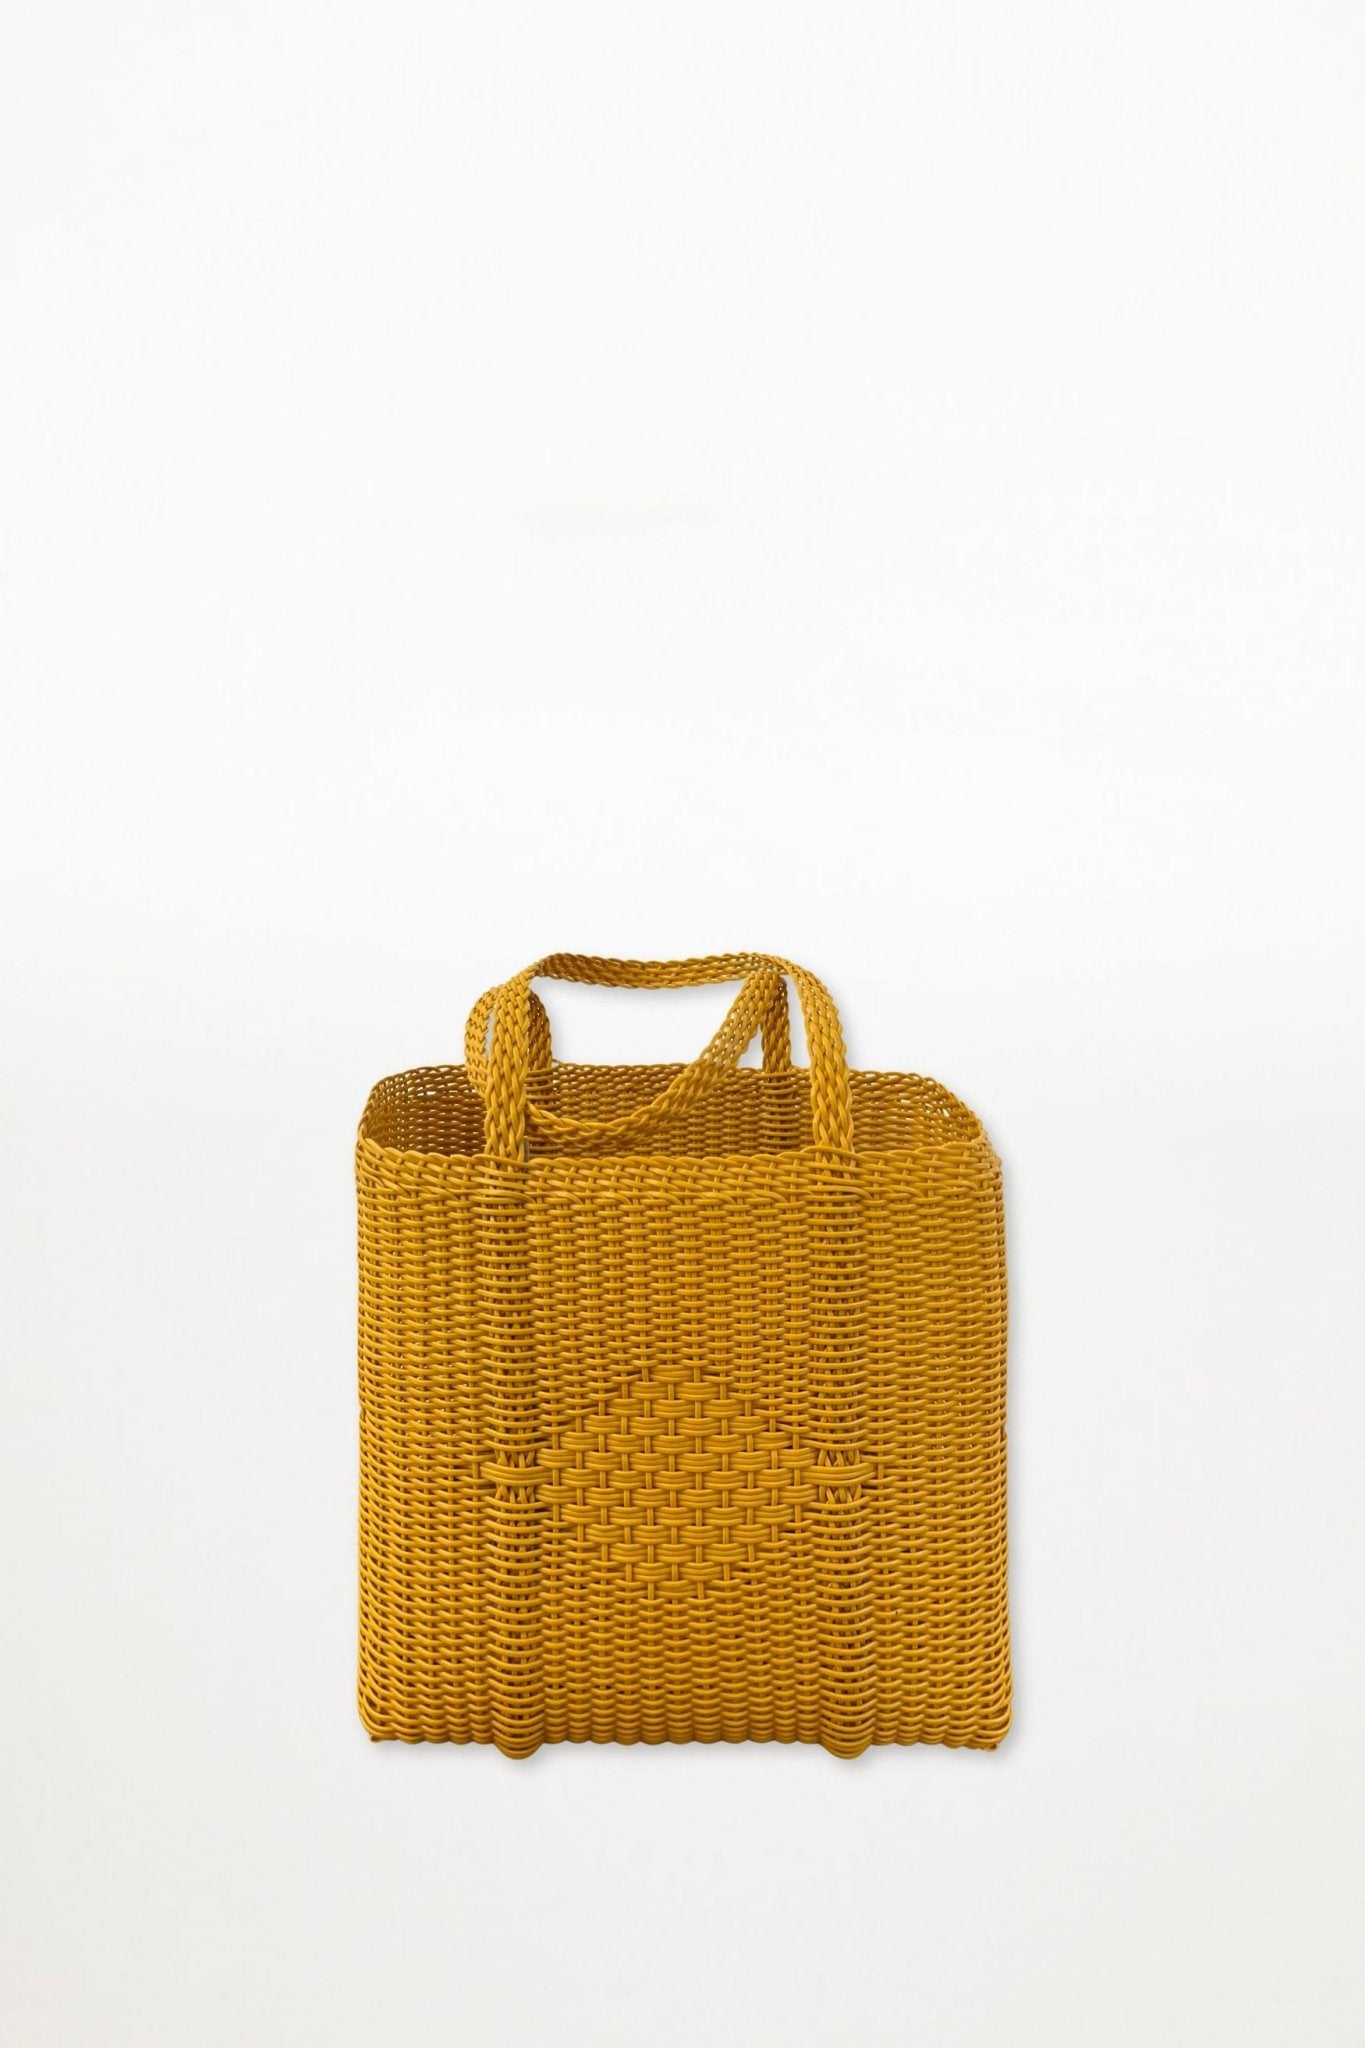 ixöq - Recycled Plastic Cesta Basket Tote Medium - Sunflower - Ensemble Studios